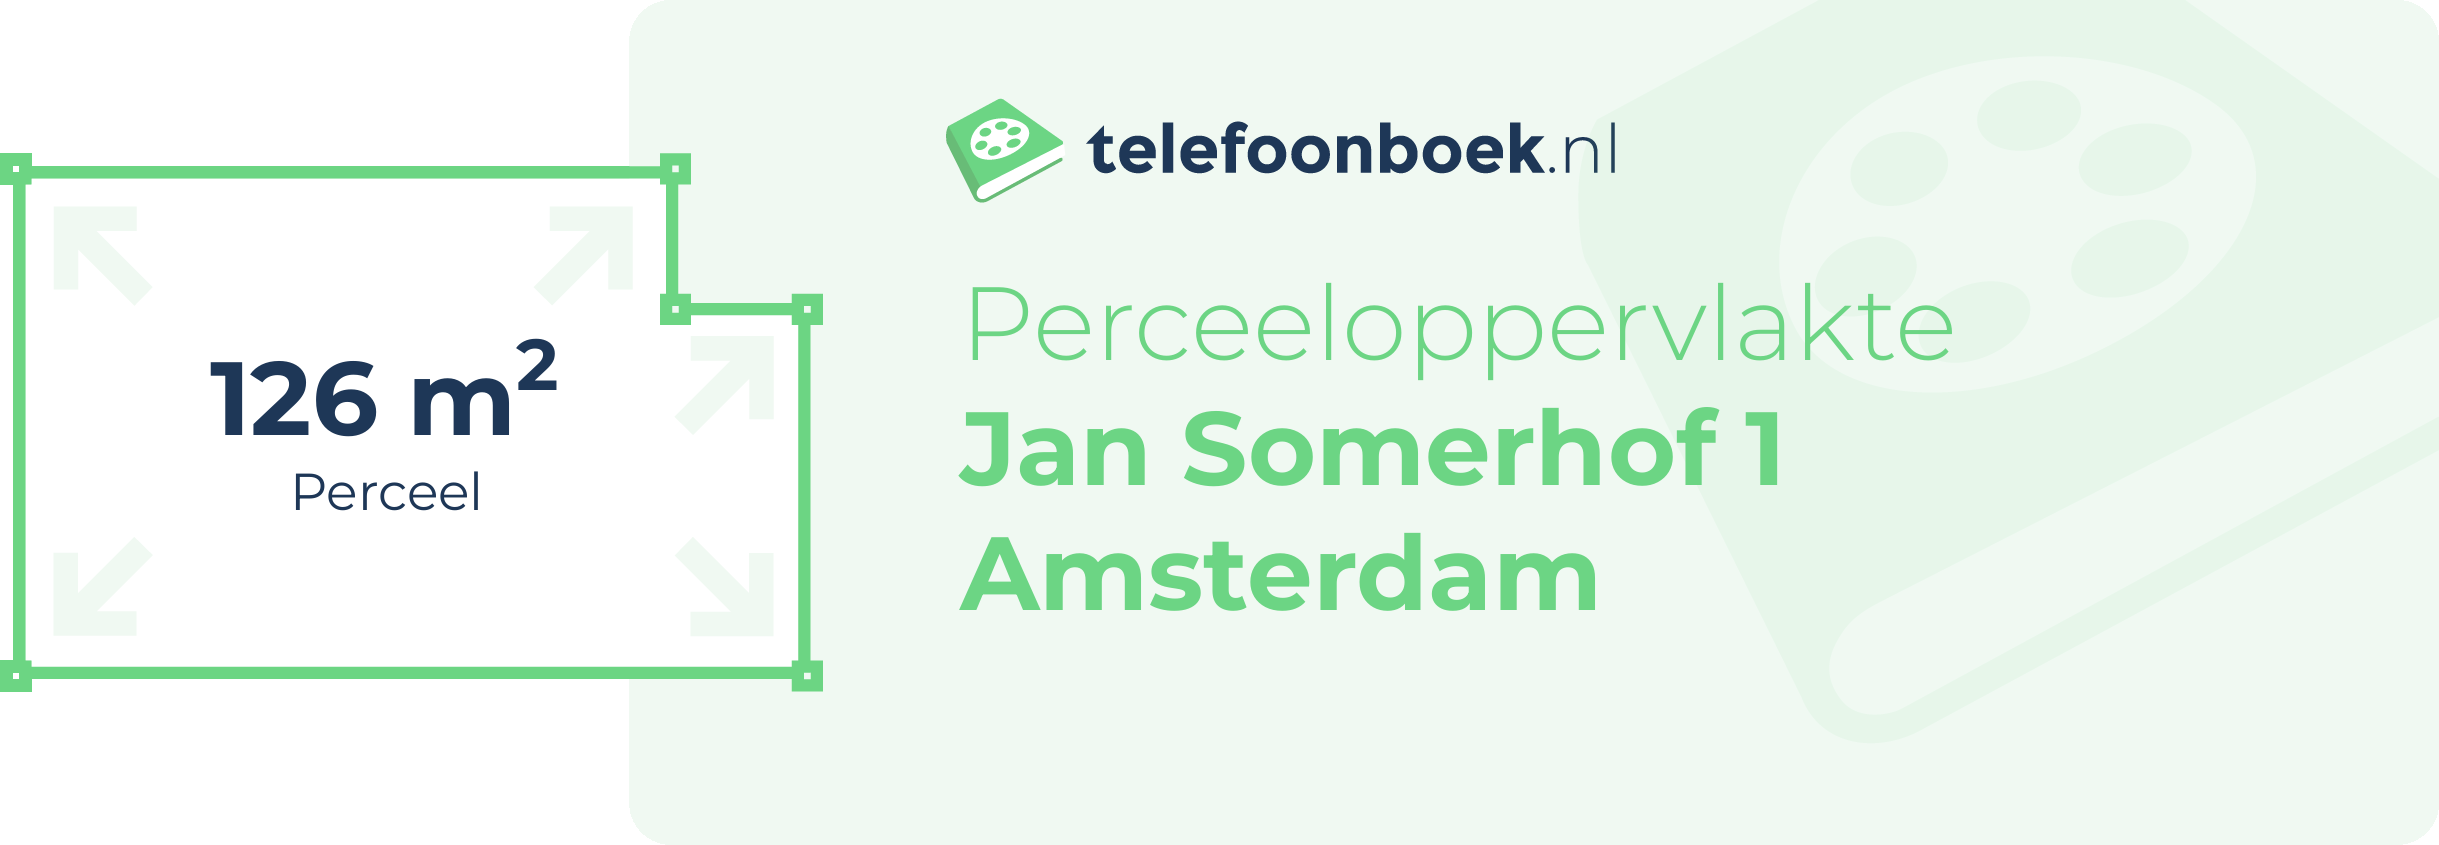 Perceeloppervlakte Jan Somerhof 1 Amsterdam